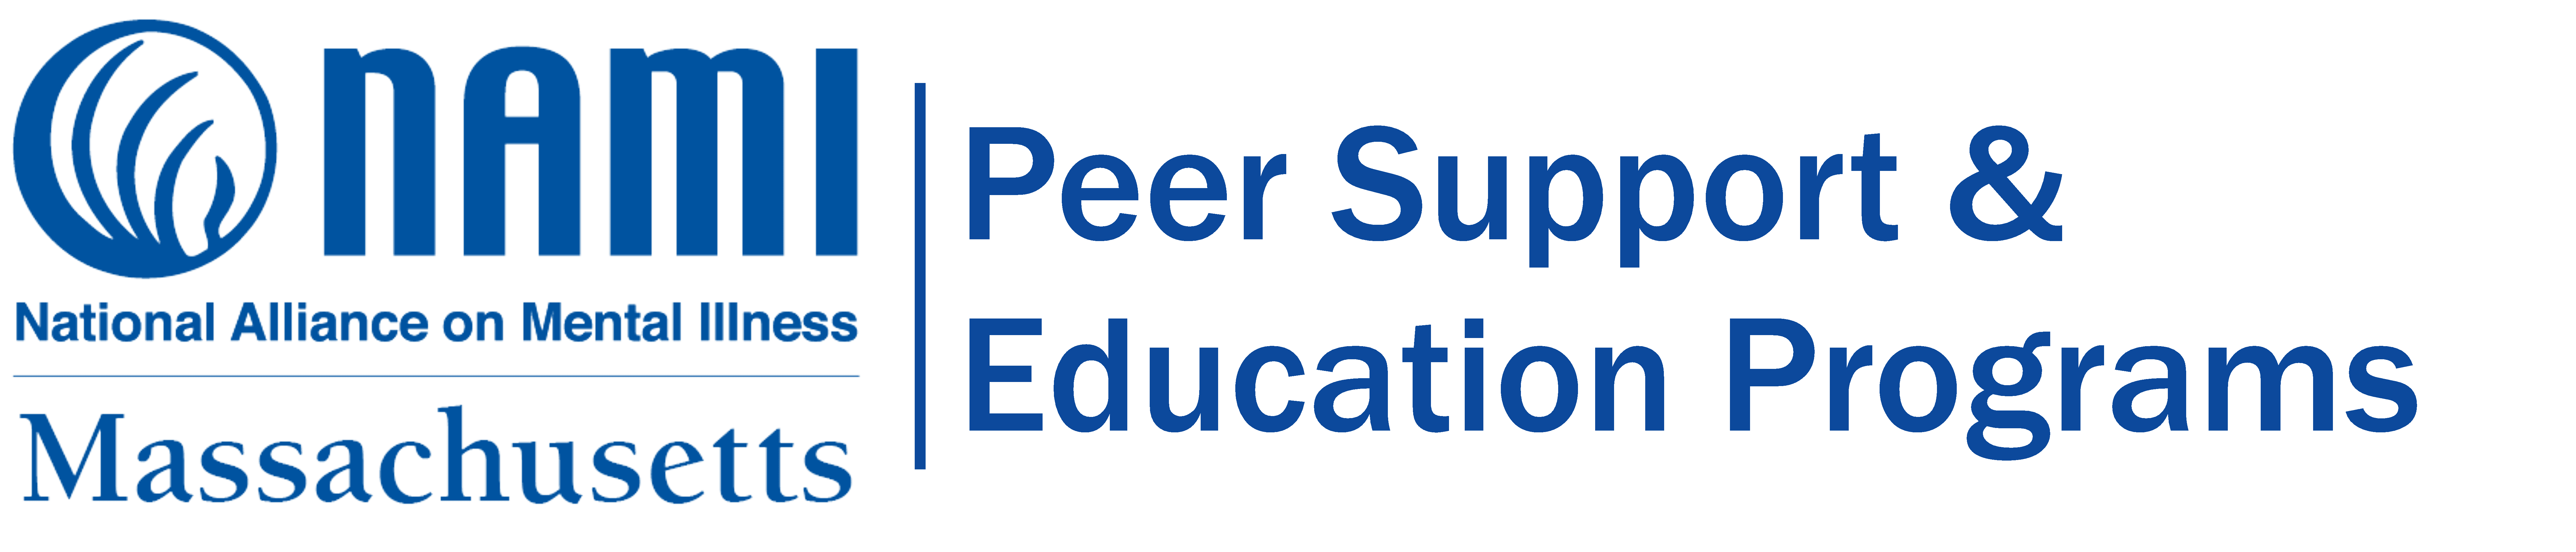 Peer Support & Education Programs logo